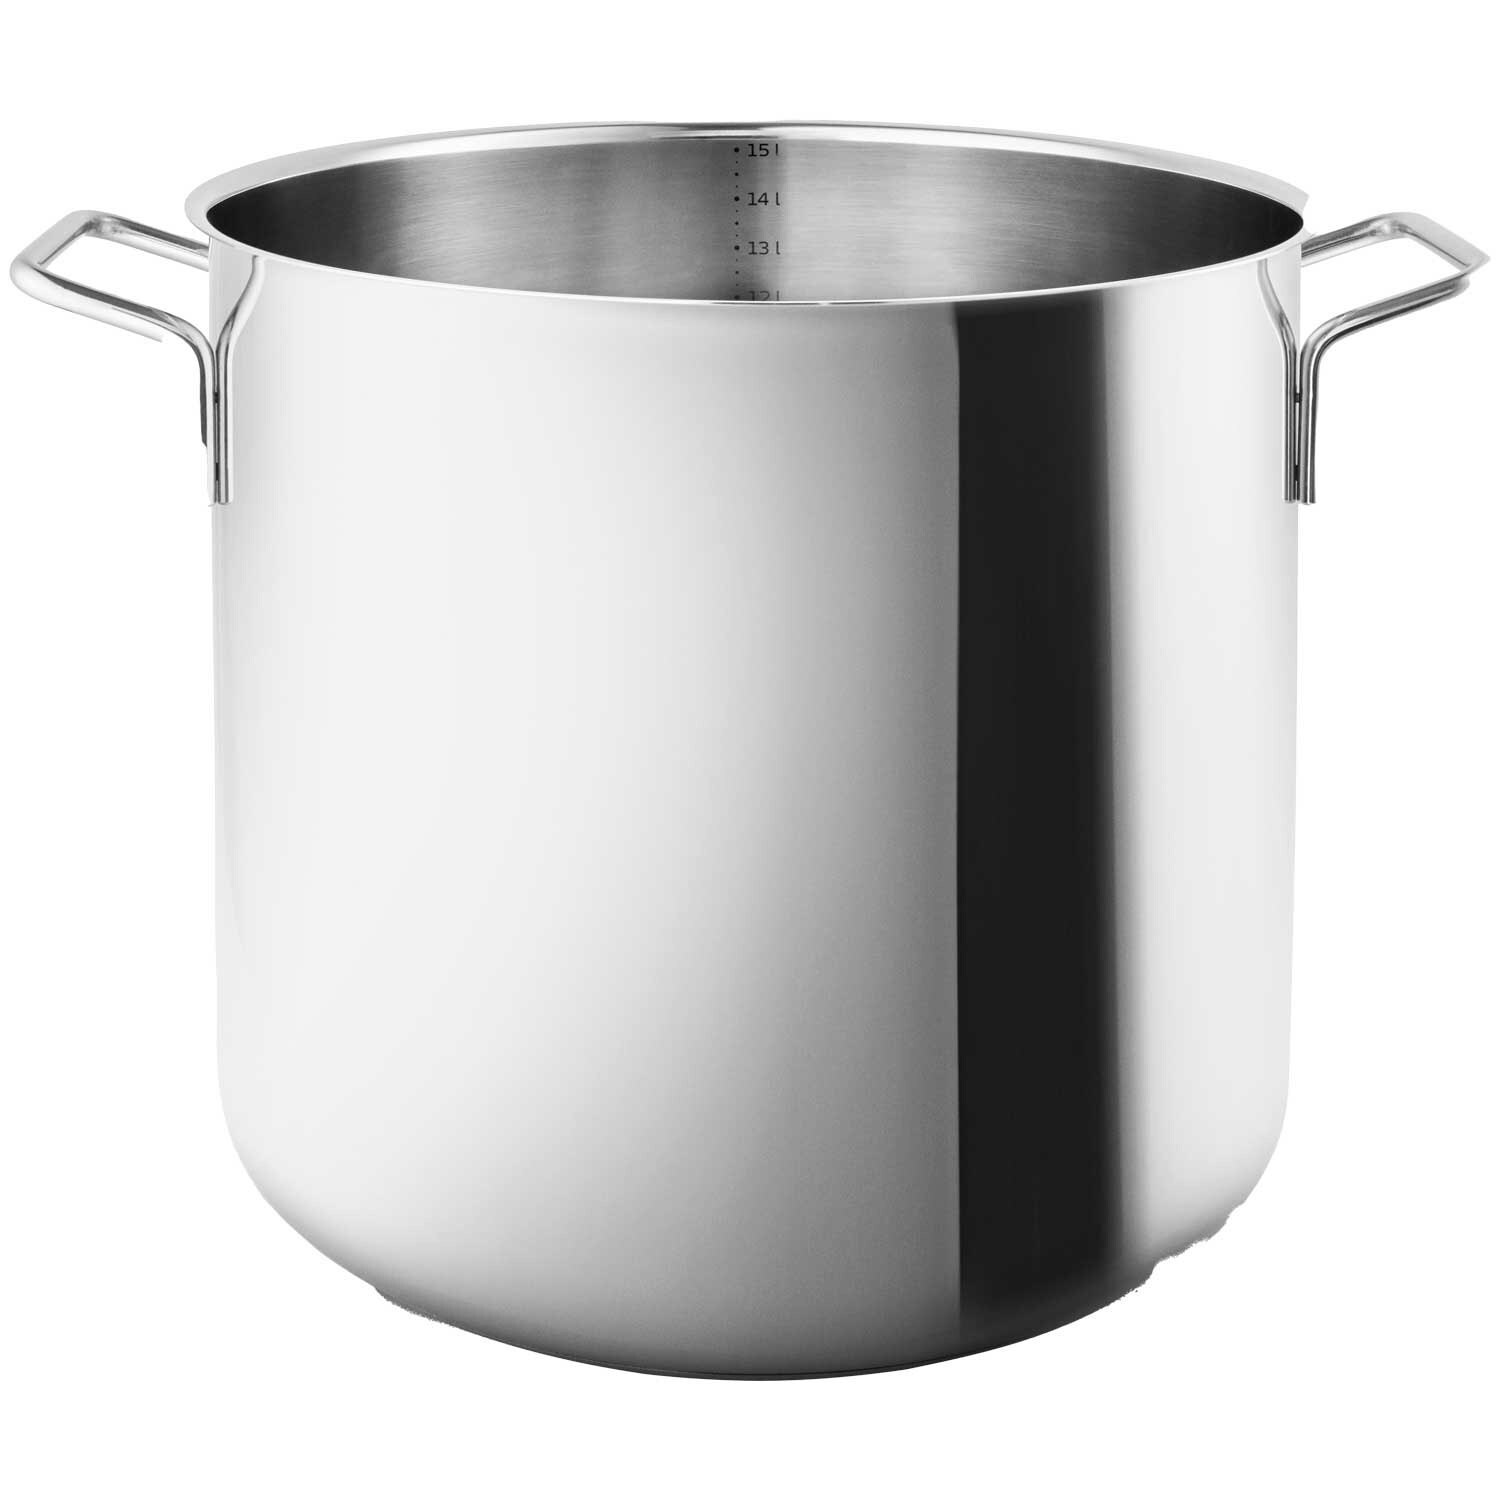 https://royaldesign.com/image/2/eva-solo-pot-stainless-steel-15-l-0